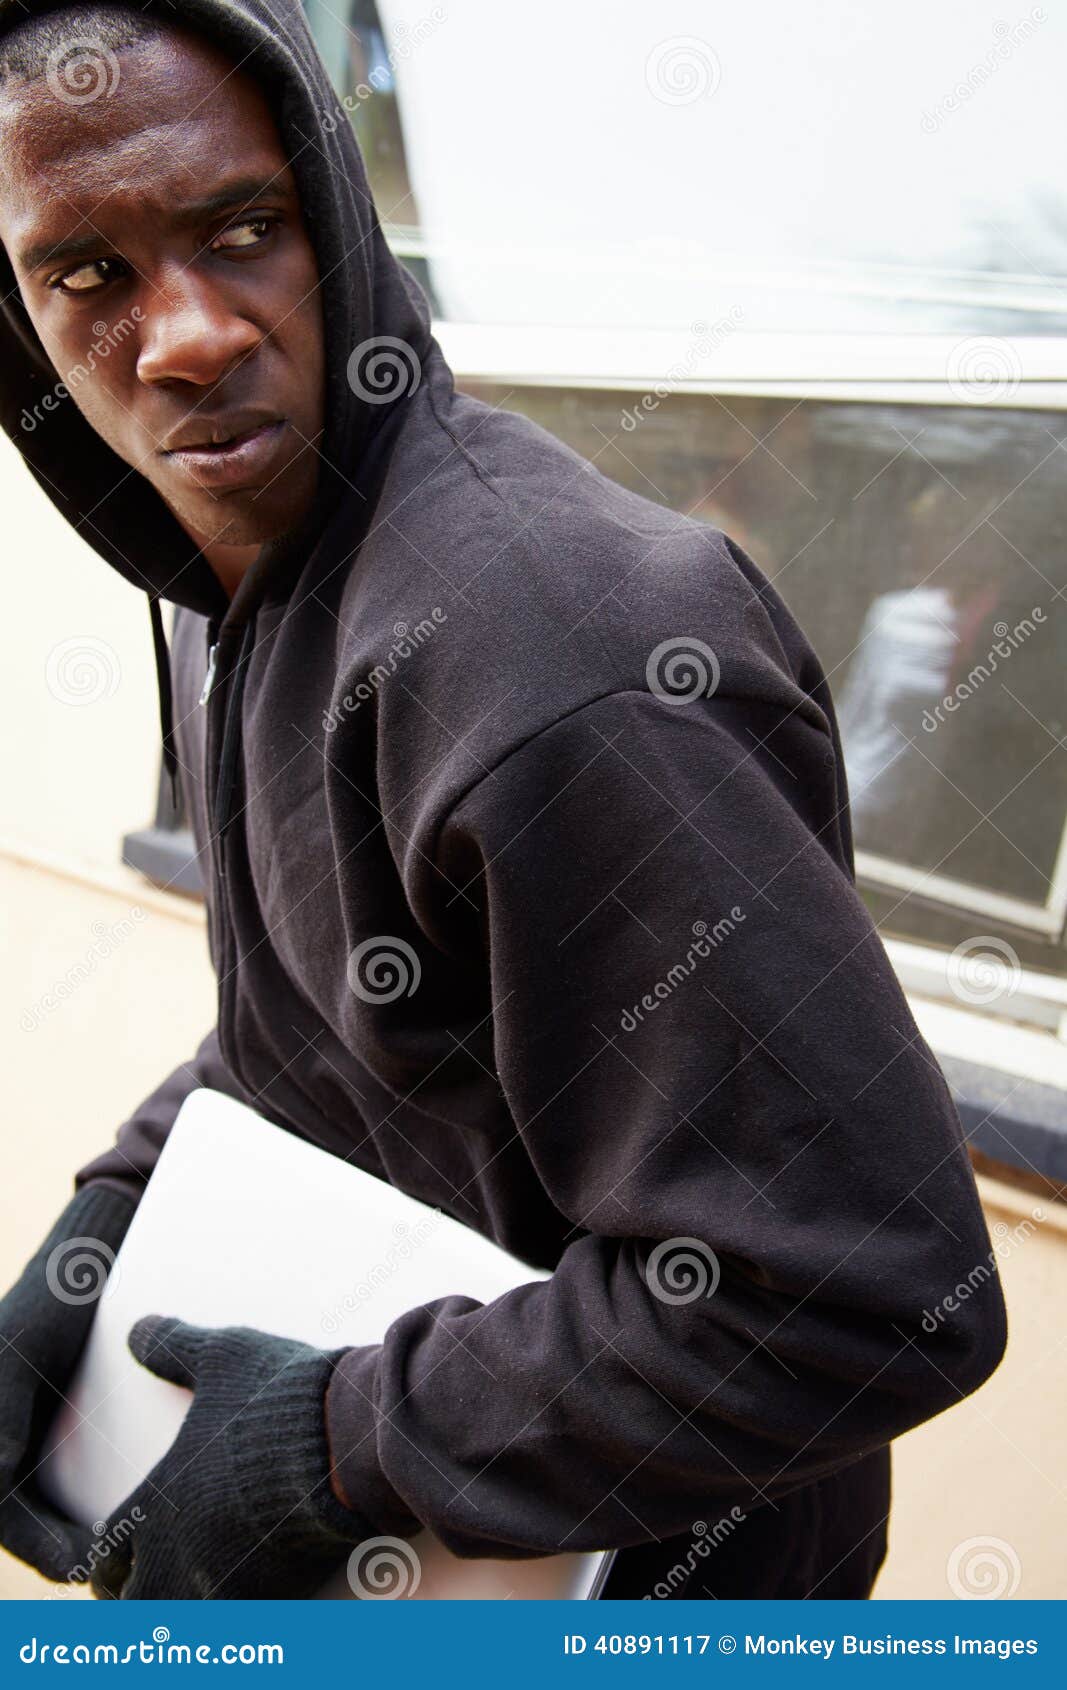 young-man-breaking-house-stealing-laptop-close-up-wearing-black-hooded-jacket-40891117.jpg